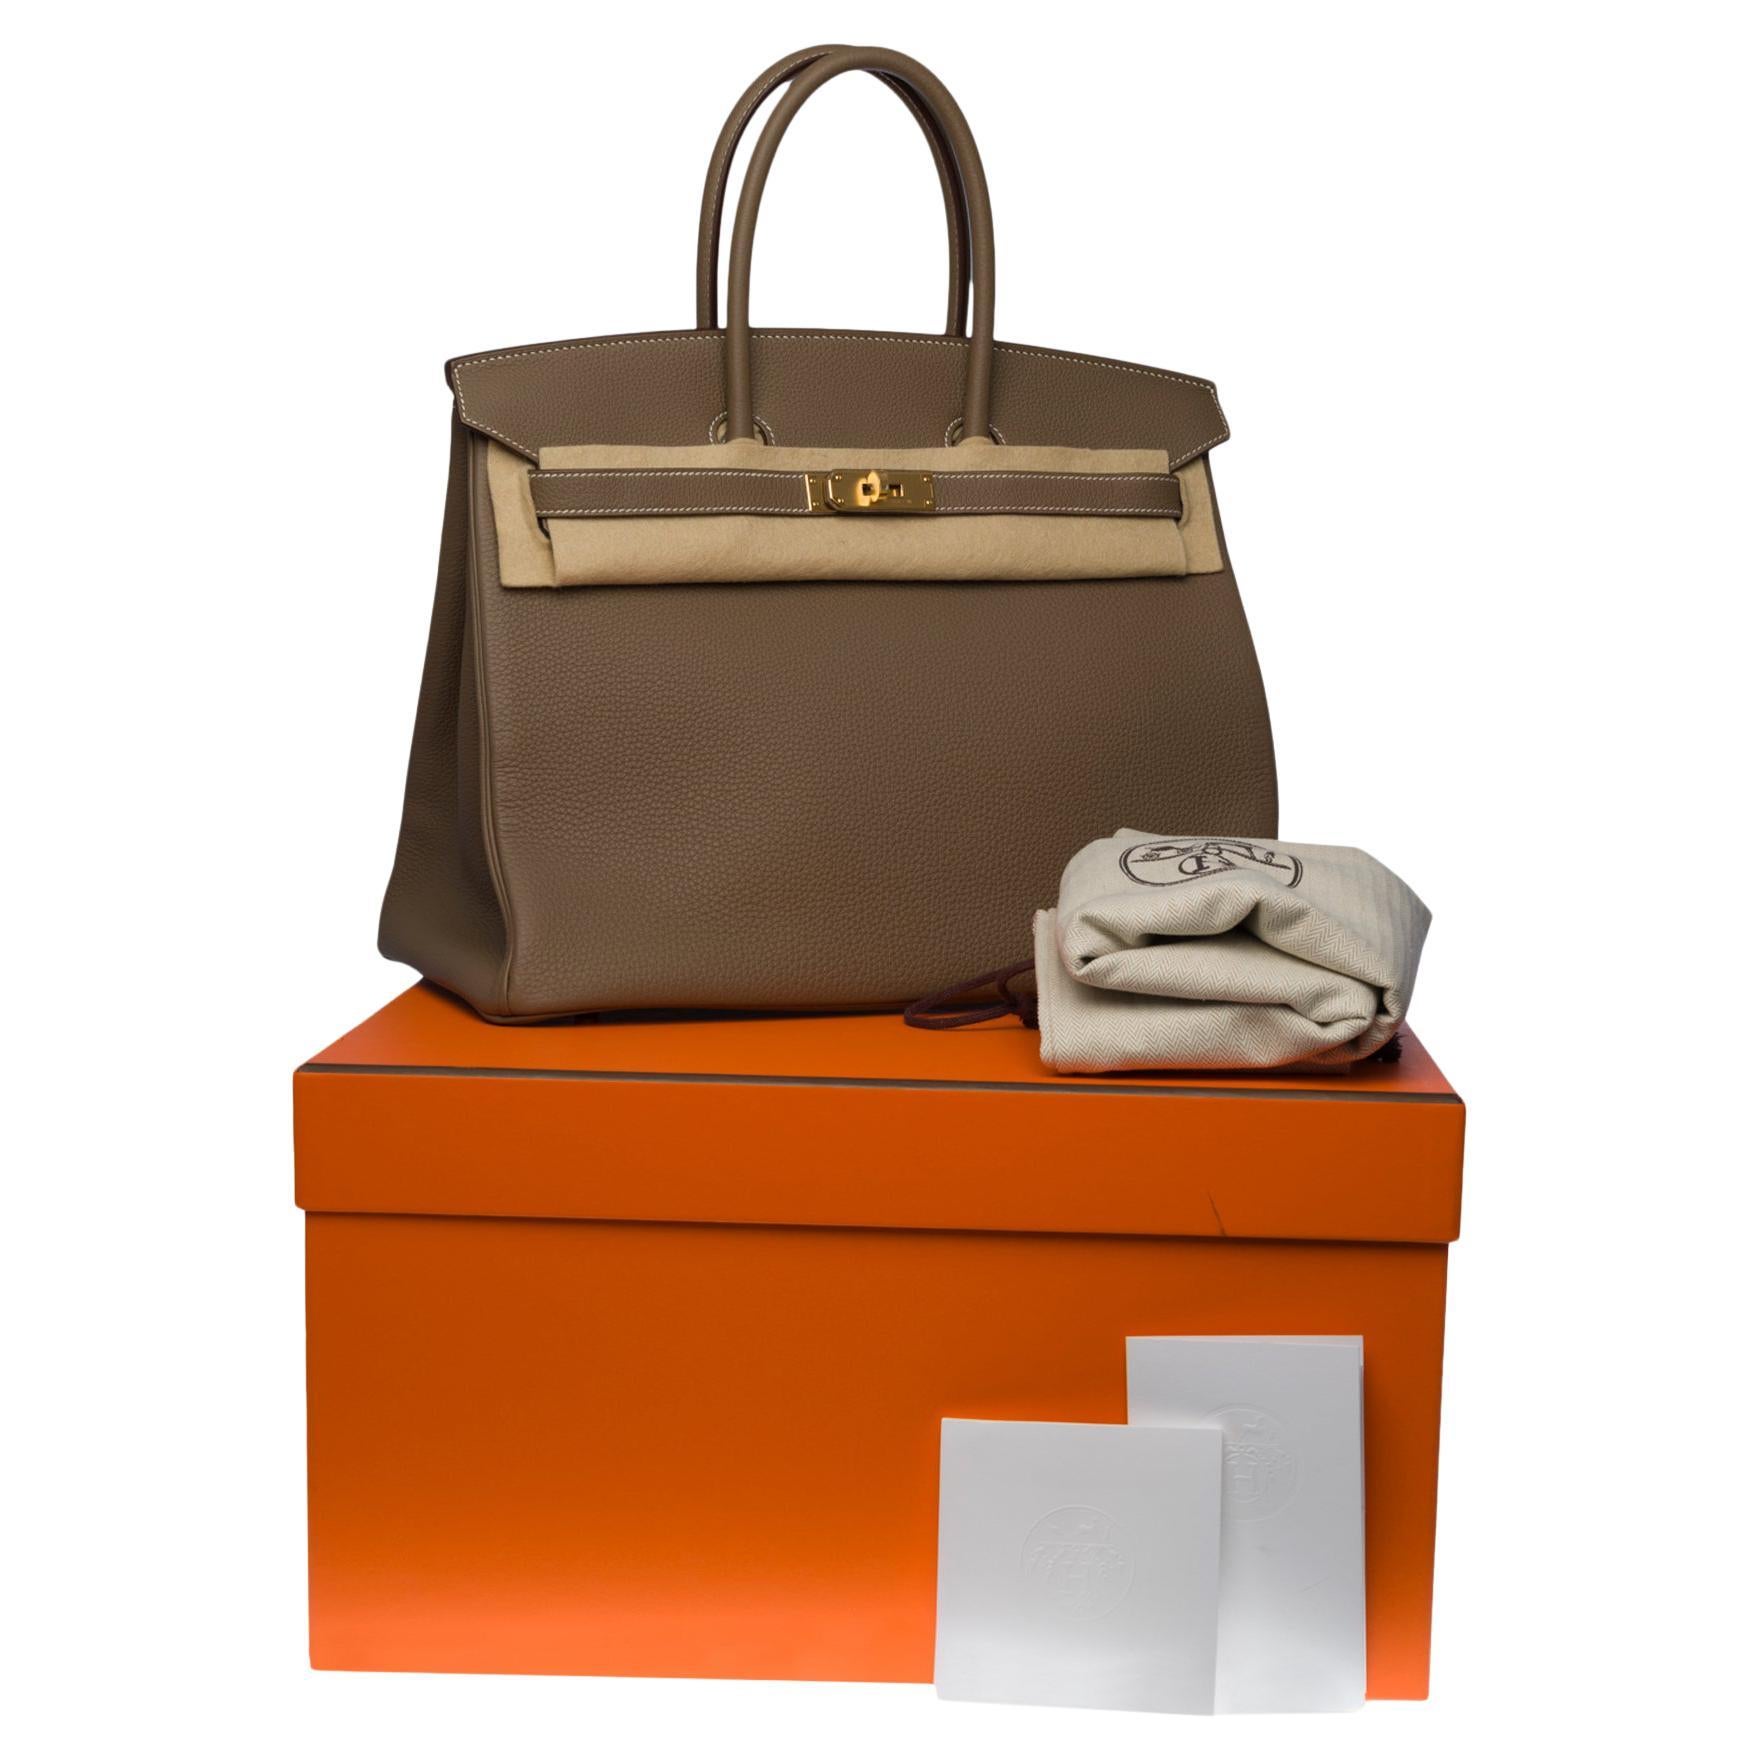 Brand New -Full set-Hermès Birkin 35 handbag in étoupe Togo leather, GHW